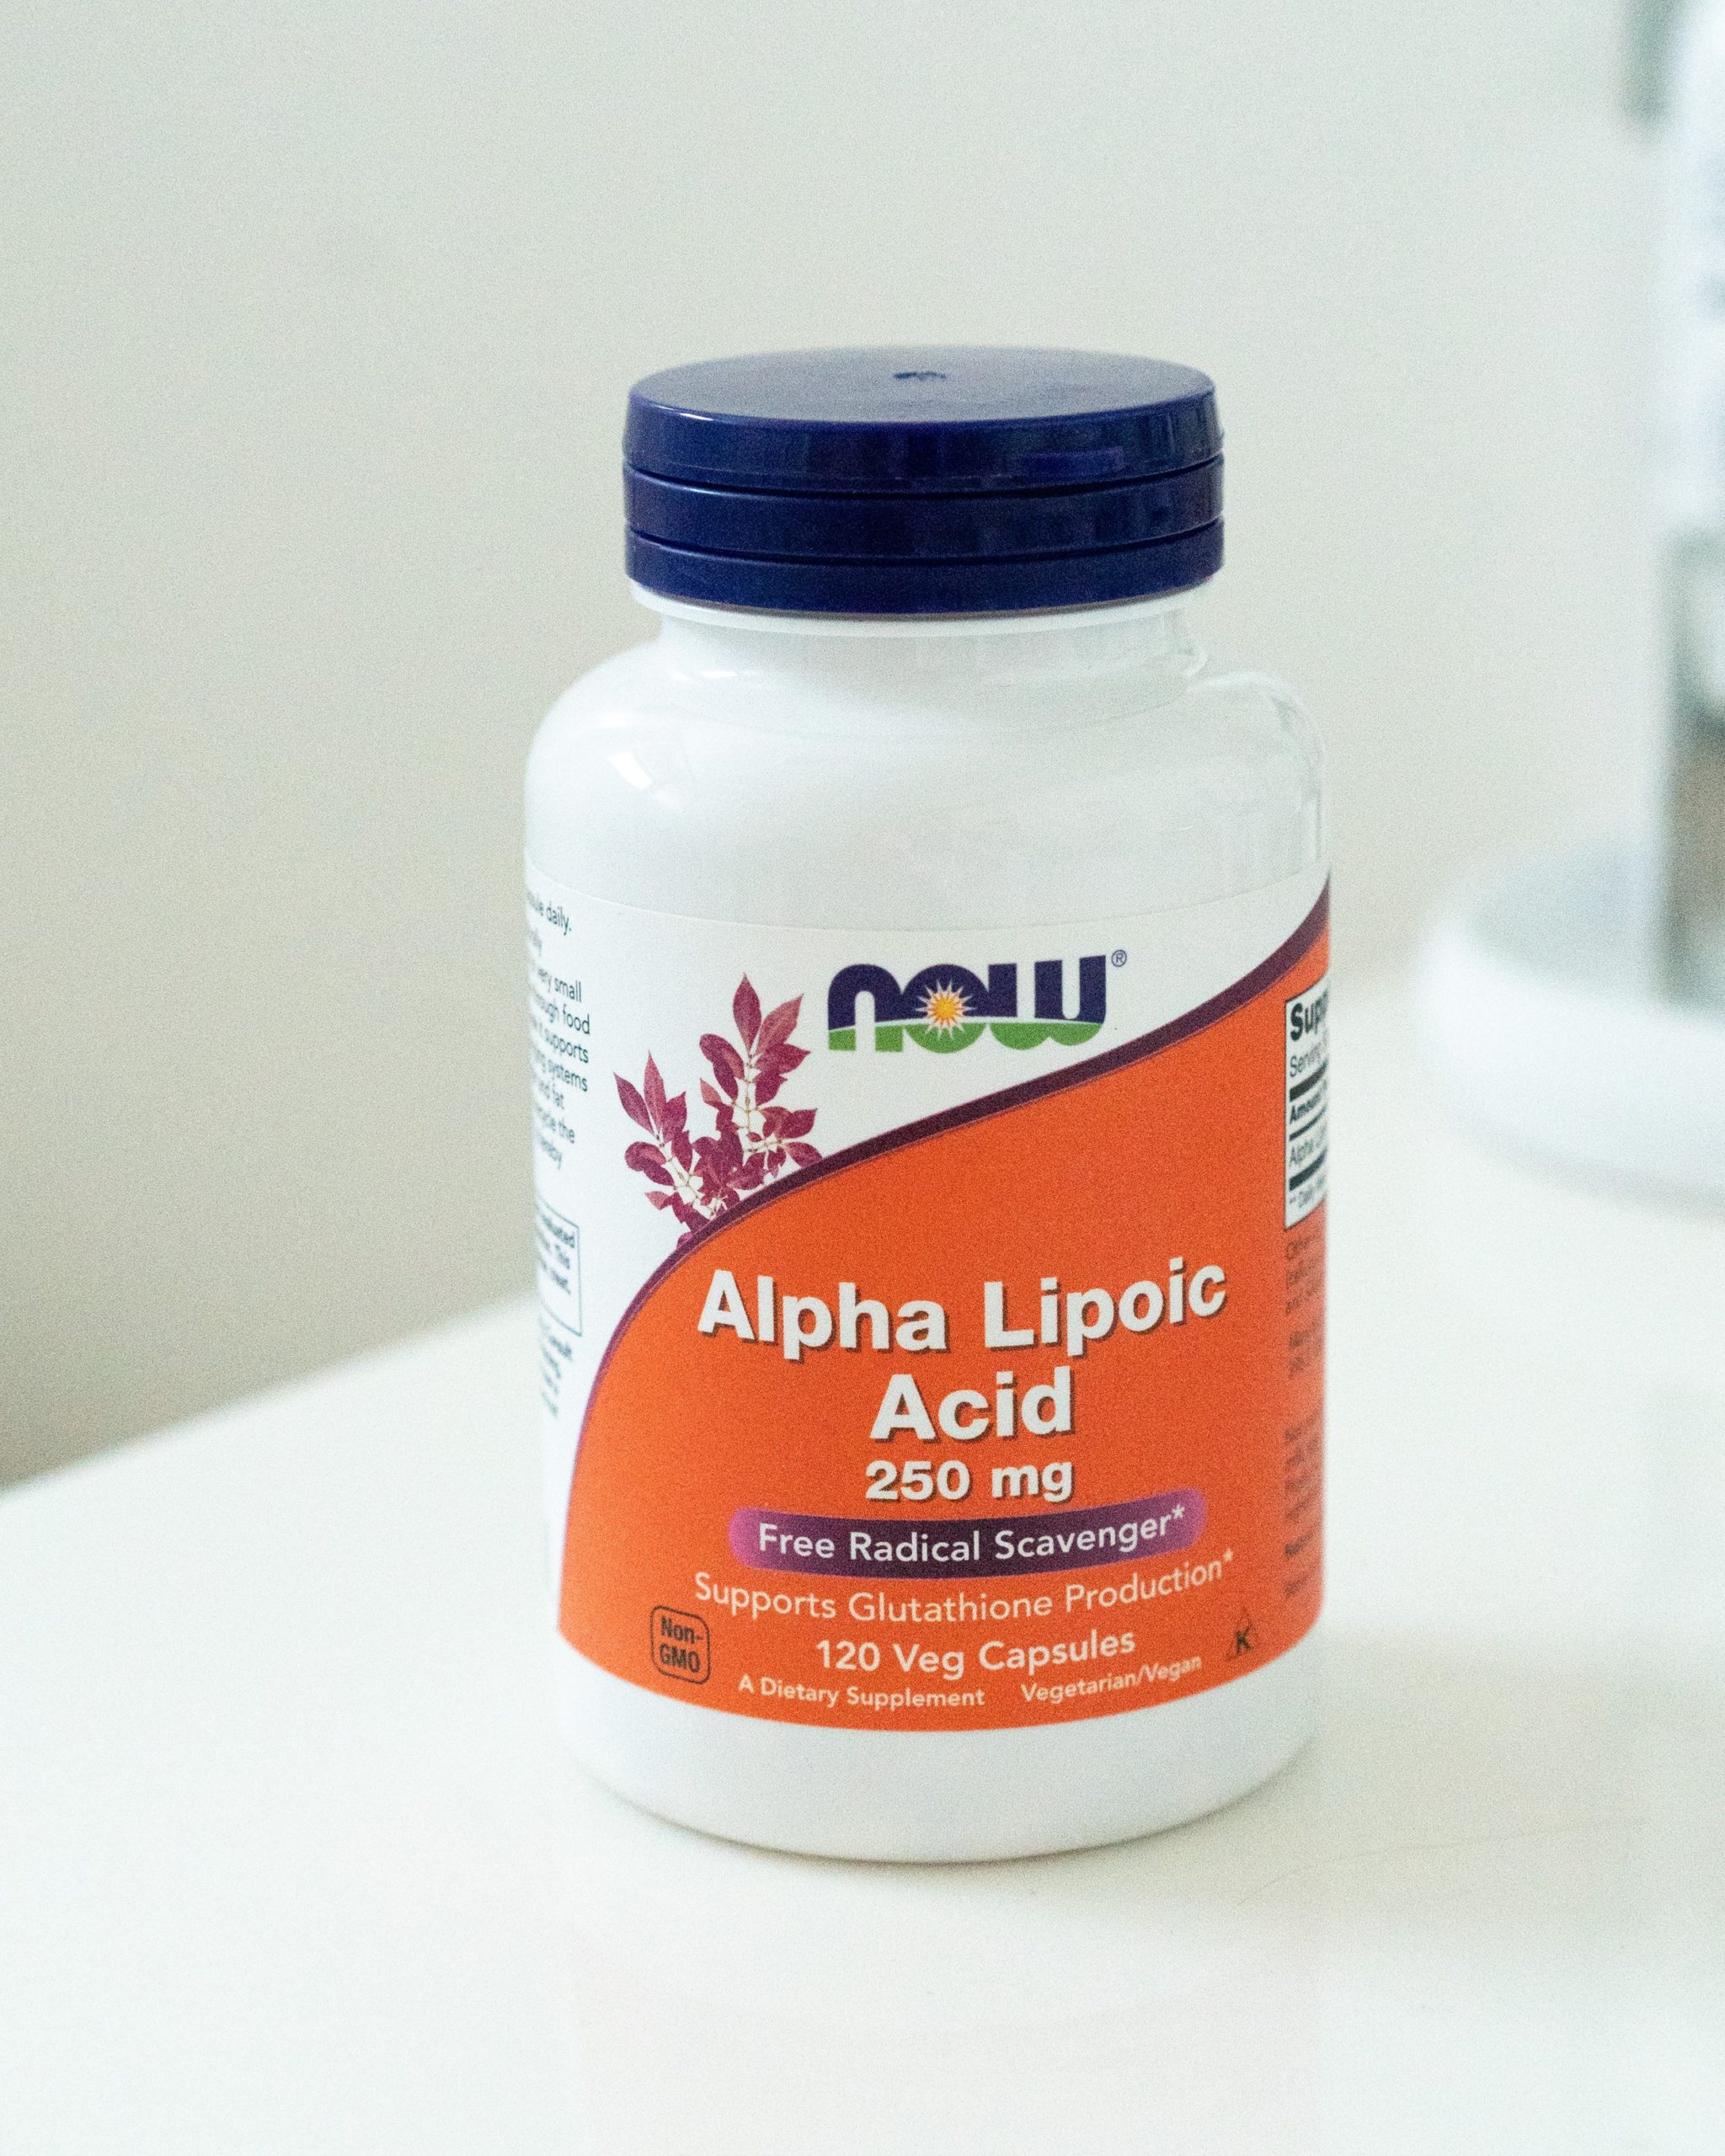 A bottle of Alpha Lipoic Acid